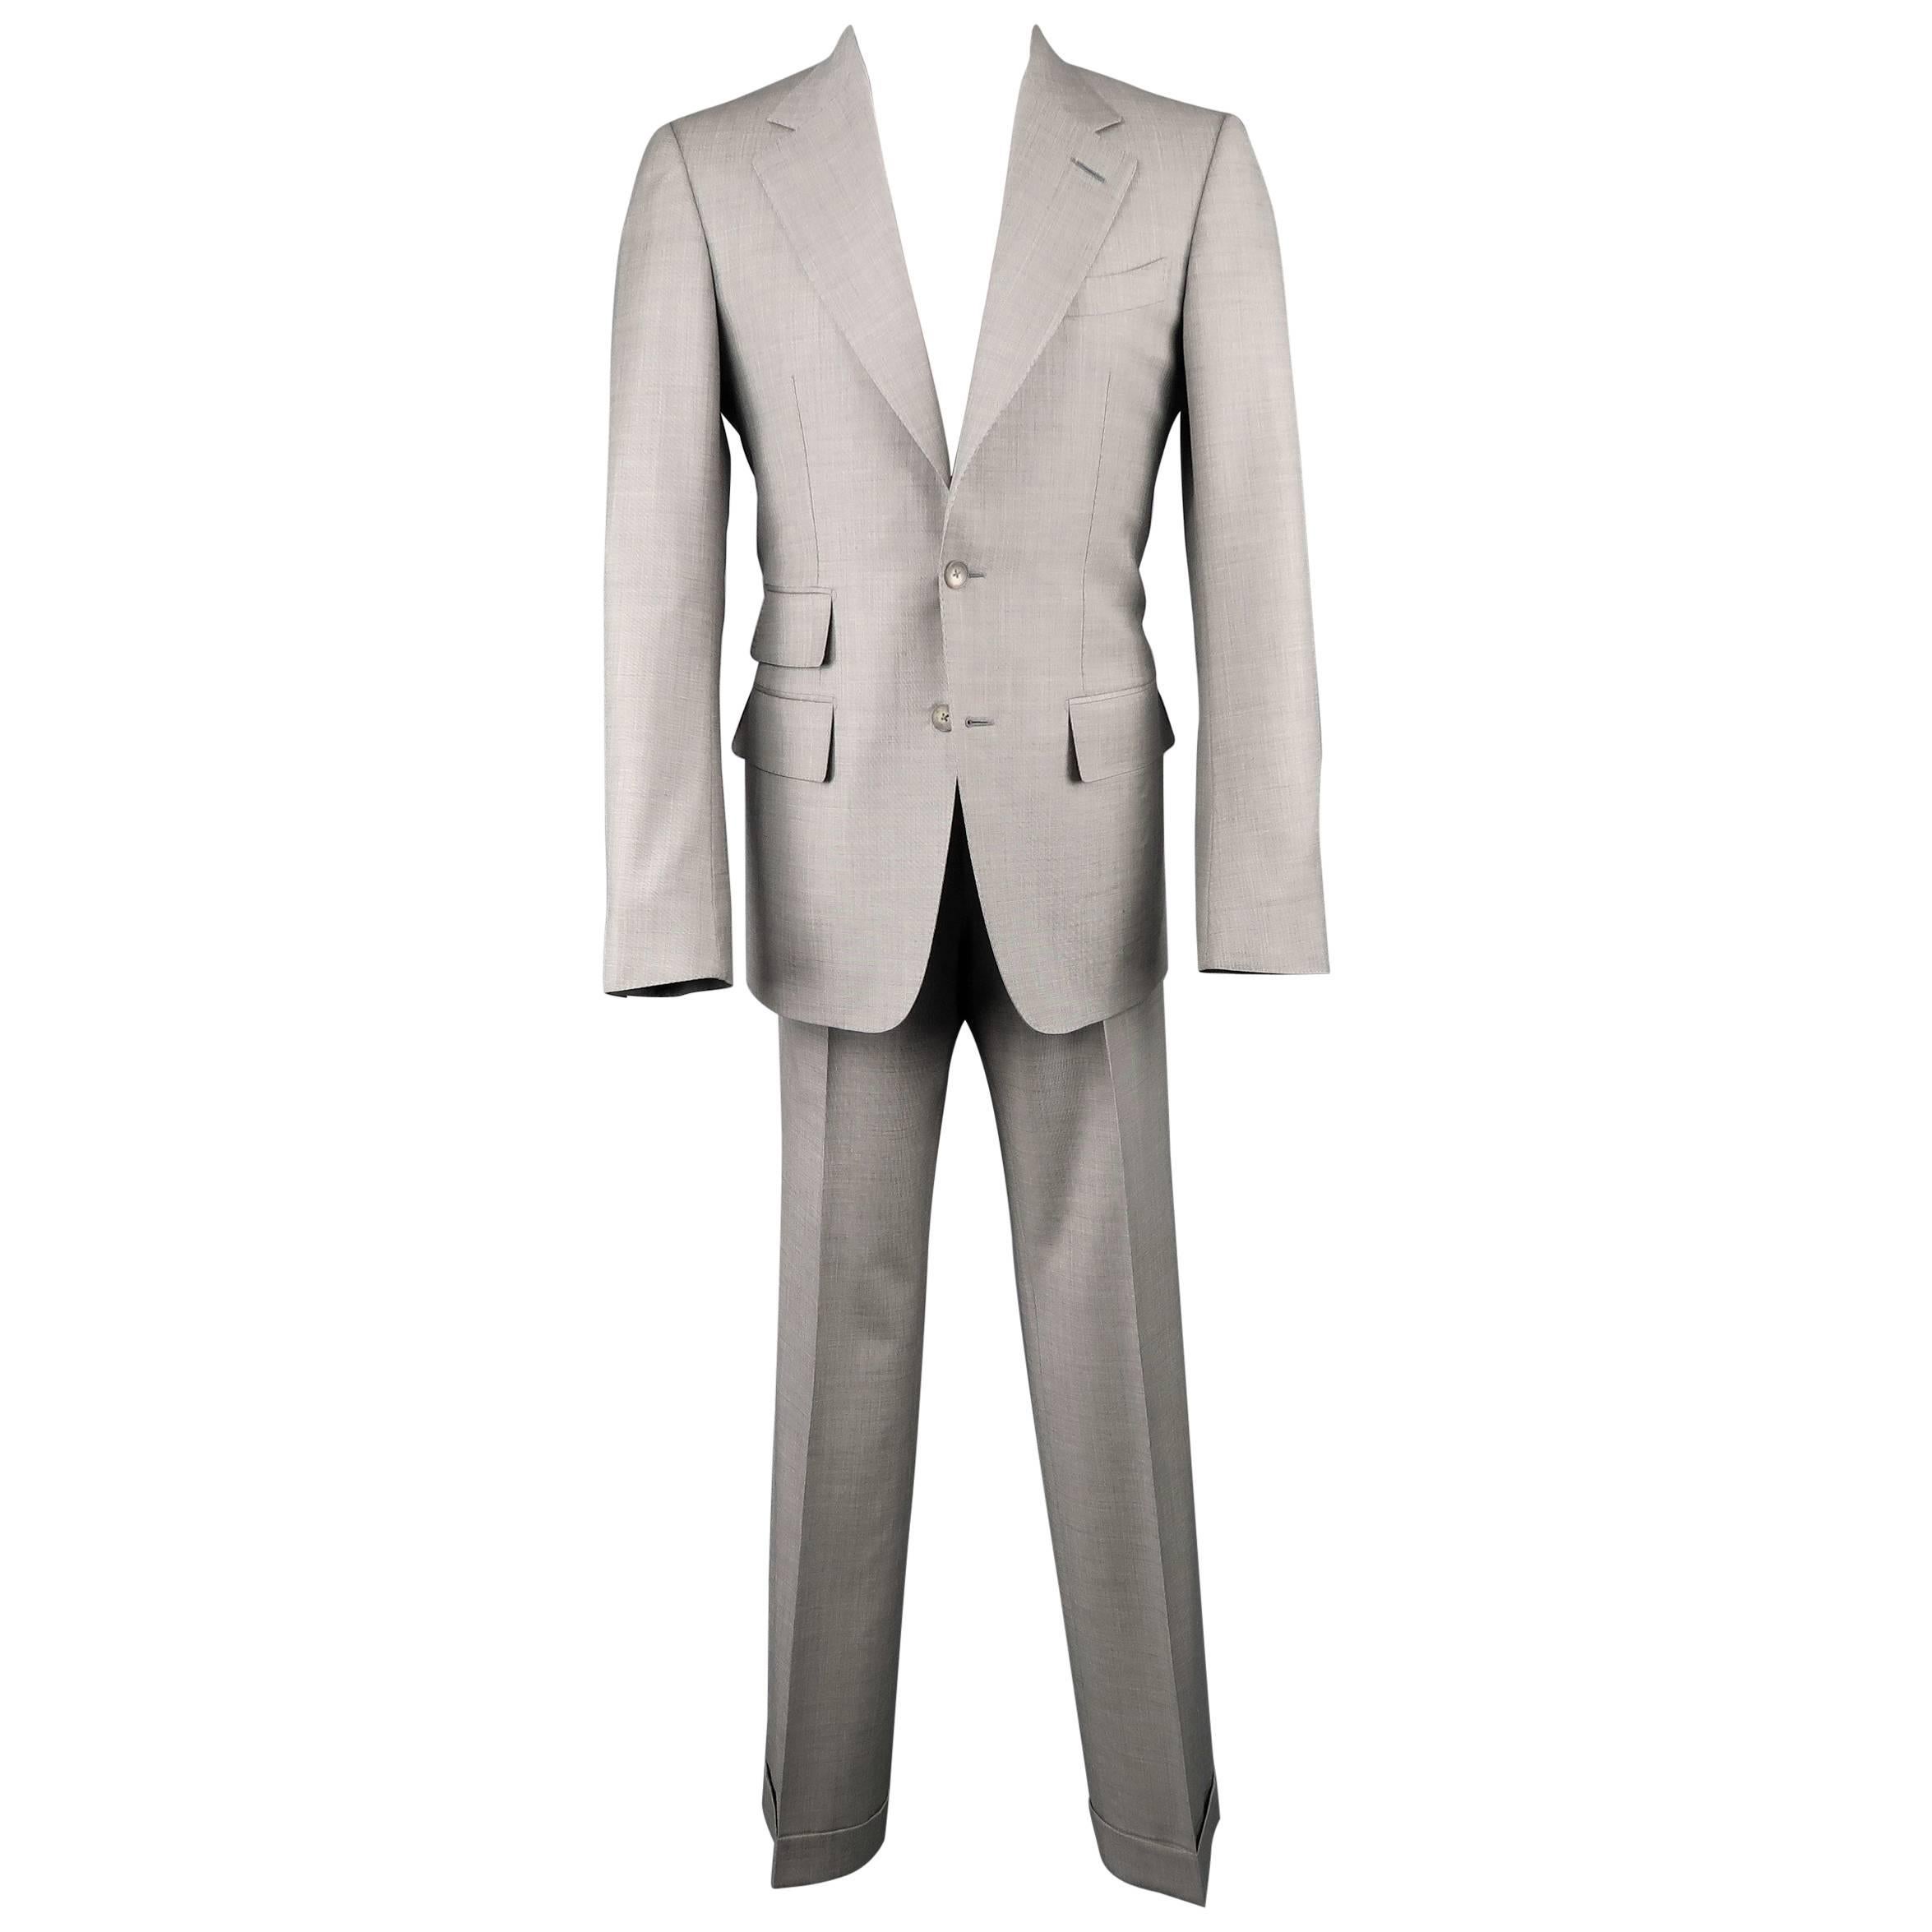 Tom Ford Men's Light Grey Wool 2 Button Notch Lapel Suit